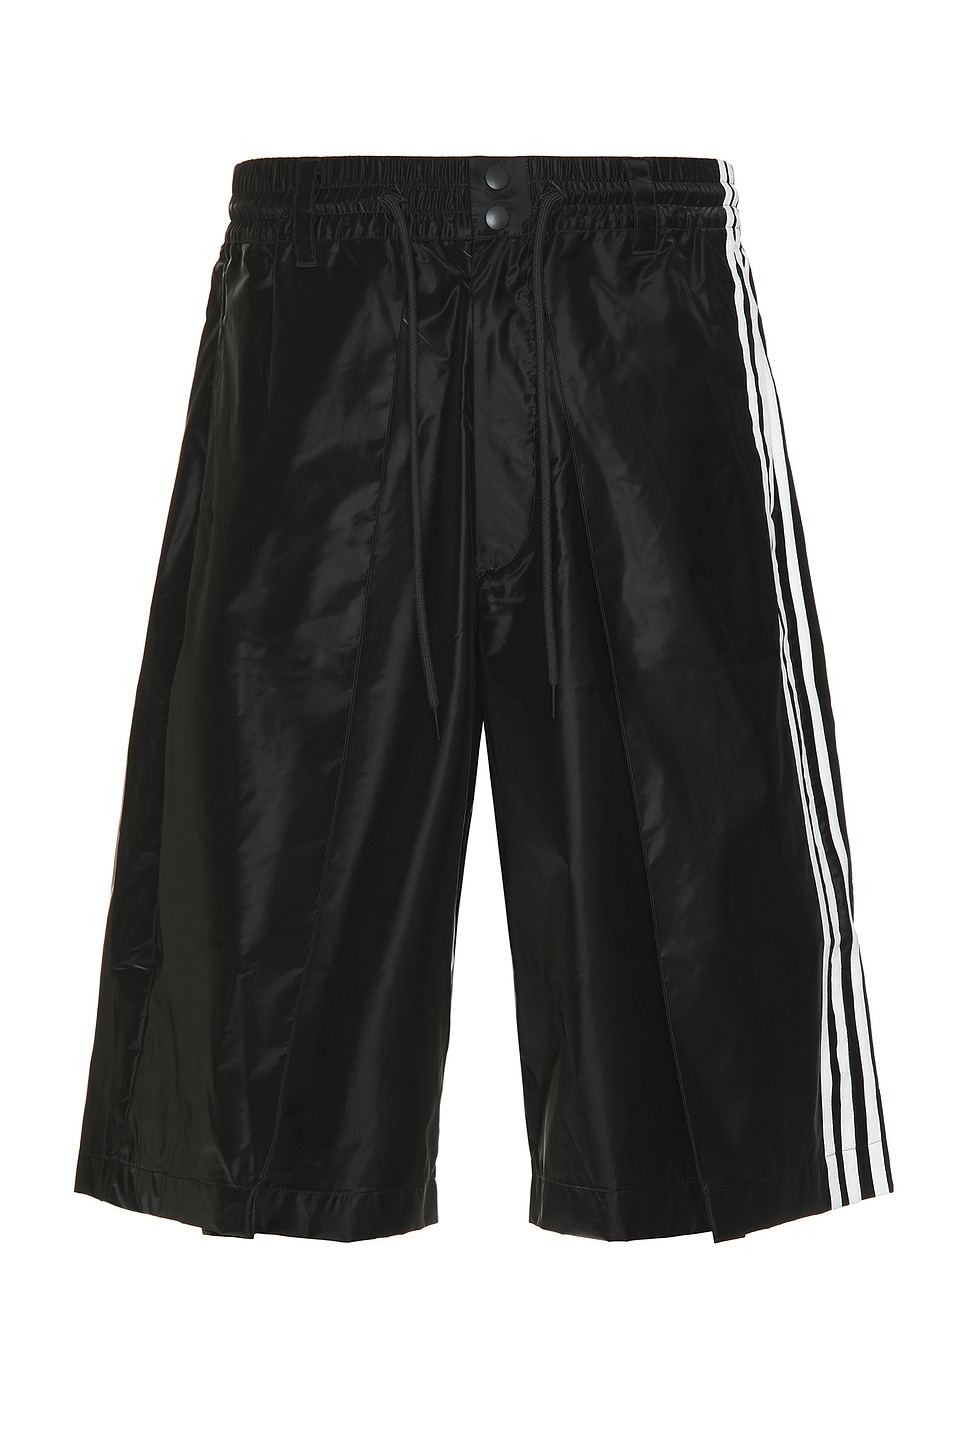 Image 1 of Y-3 Yohji Yamamoto Triple Black Shorts in Black